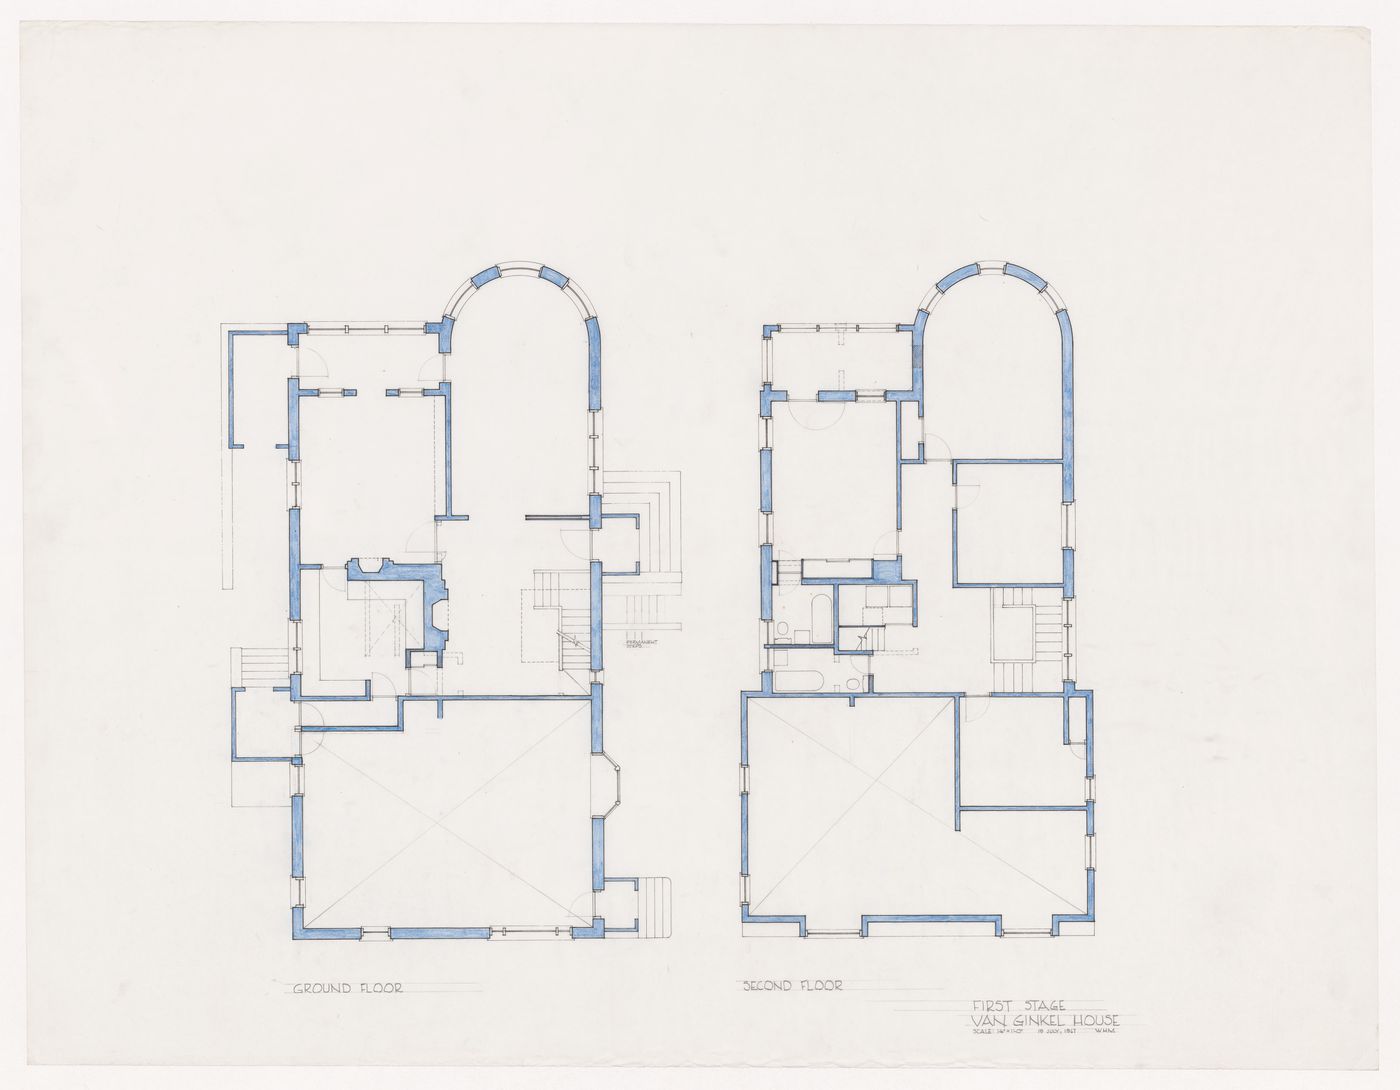 Ground floor and second floor plans for Van Ginkel House, Winnipeg, Manitoba